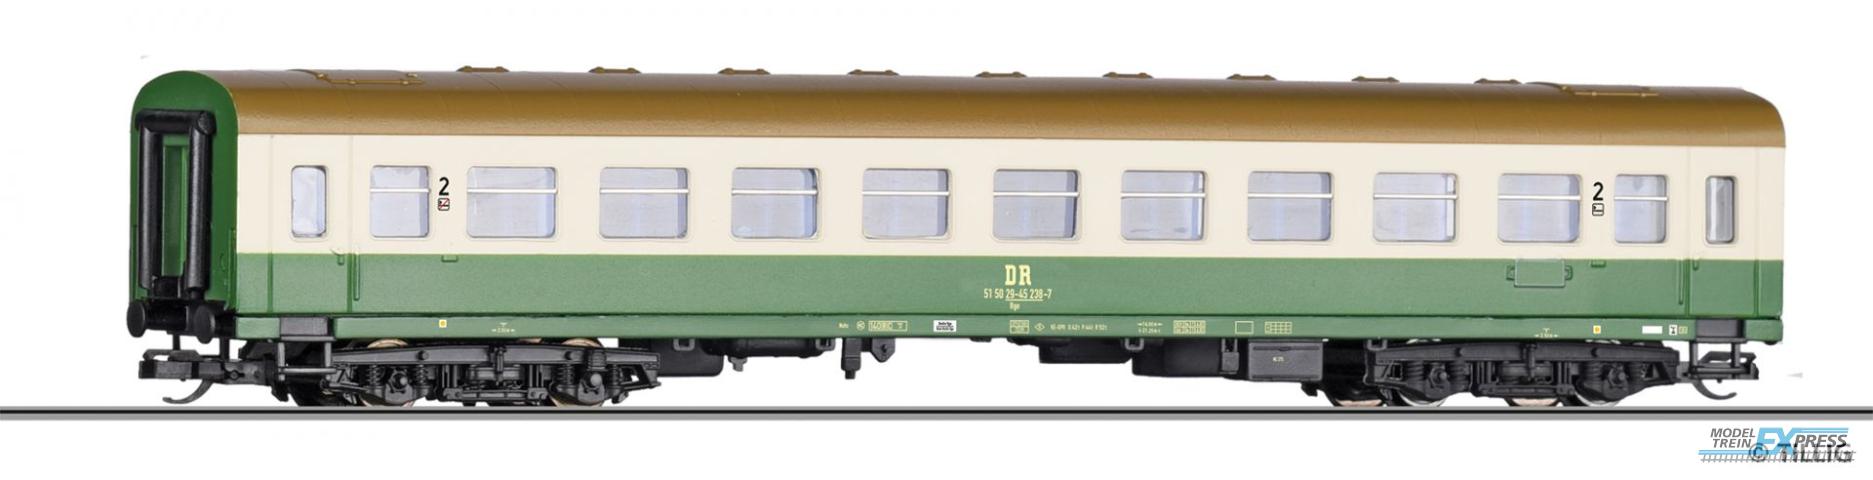 Tillig 95616 Reisezugwagen 2. Klasse Bg der DR, Ep. IV